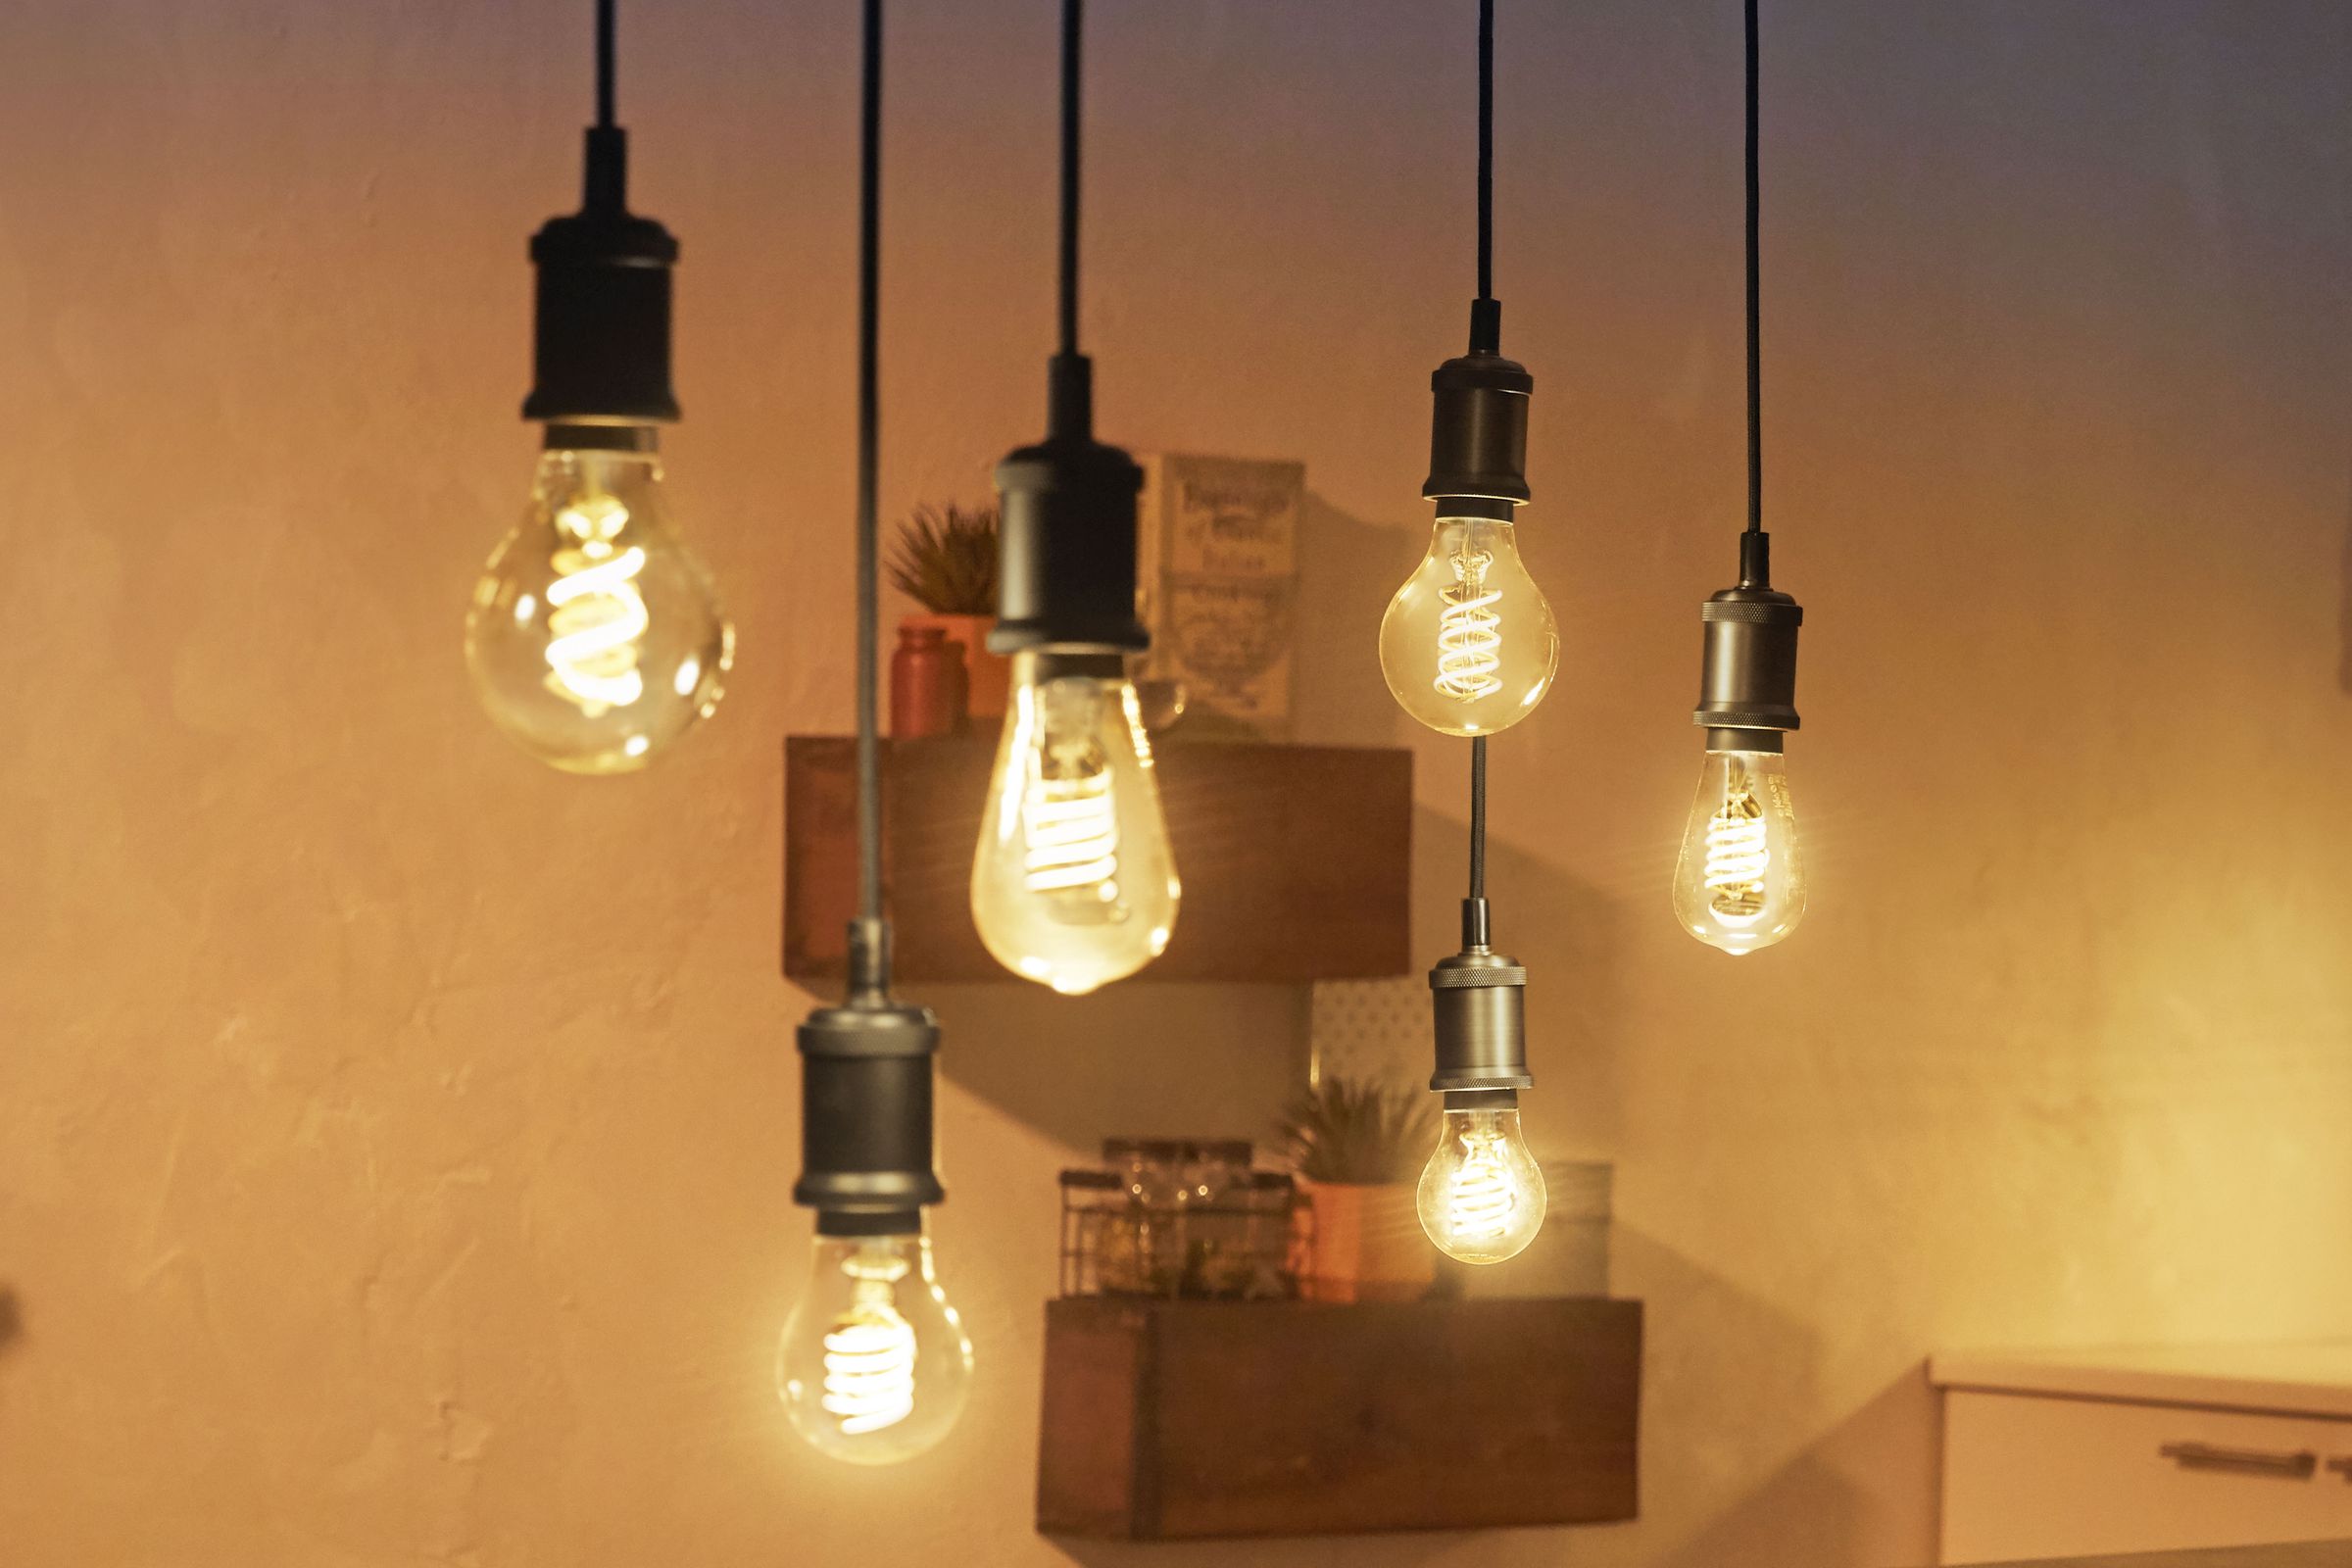 Hue Edison bulbs